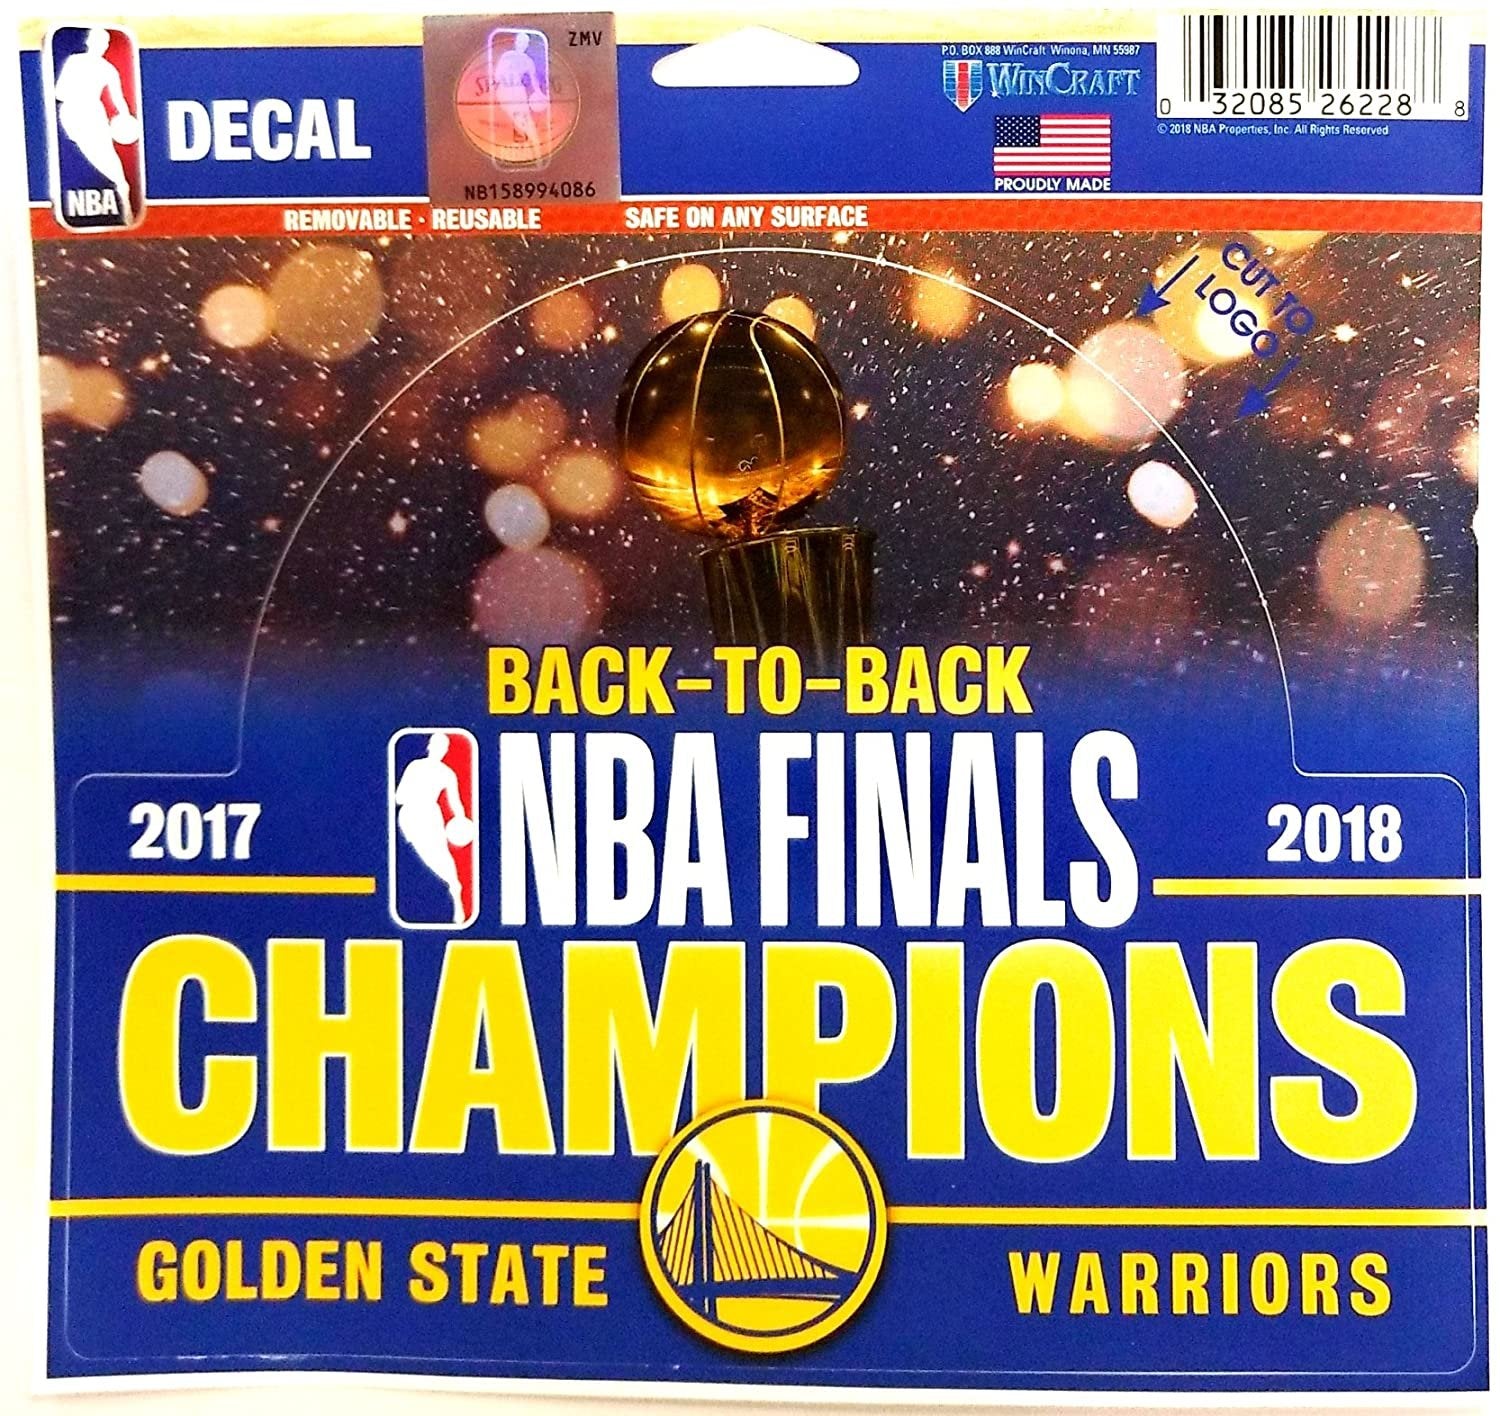 Golden State Warriors 2018 Champions WC 26228207 5" Decal Flat Perfect Cut Reusable Basketball